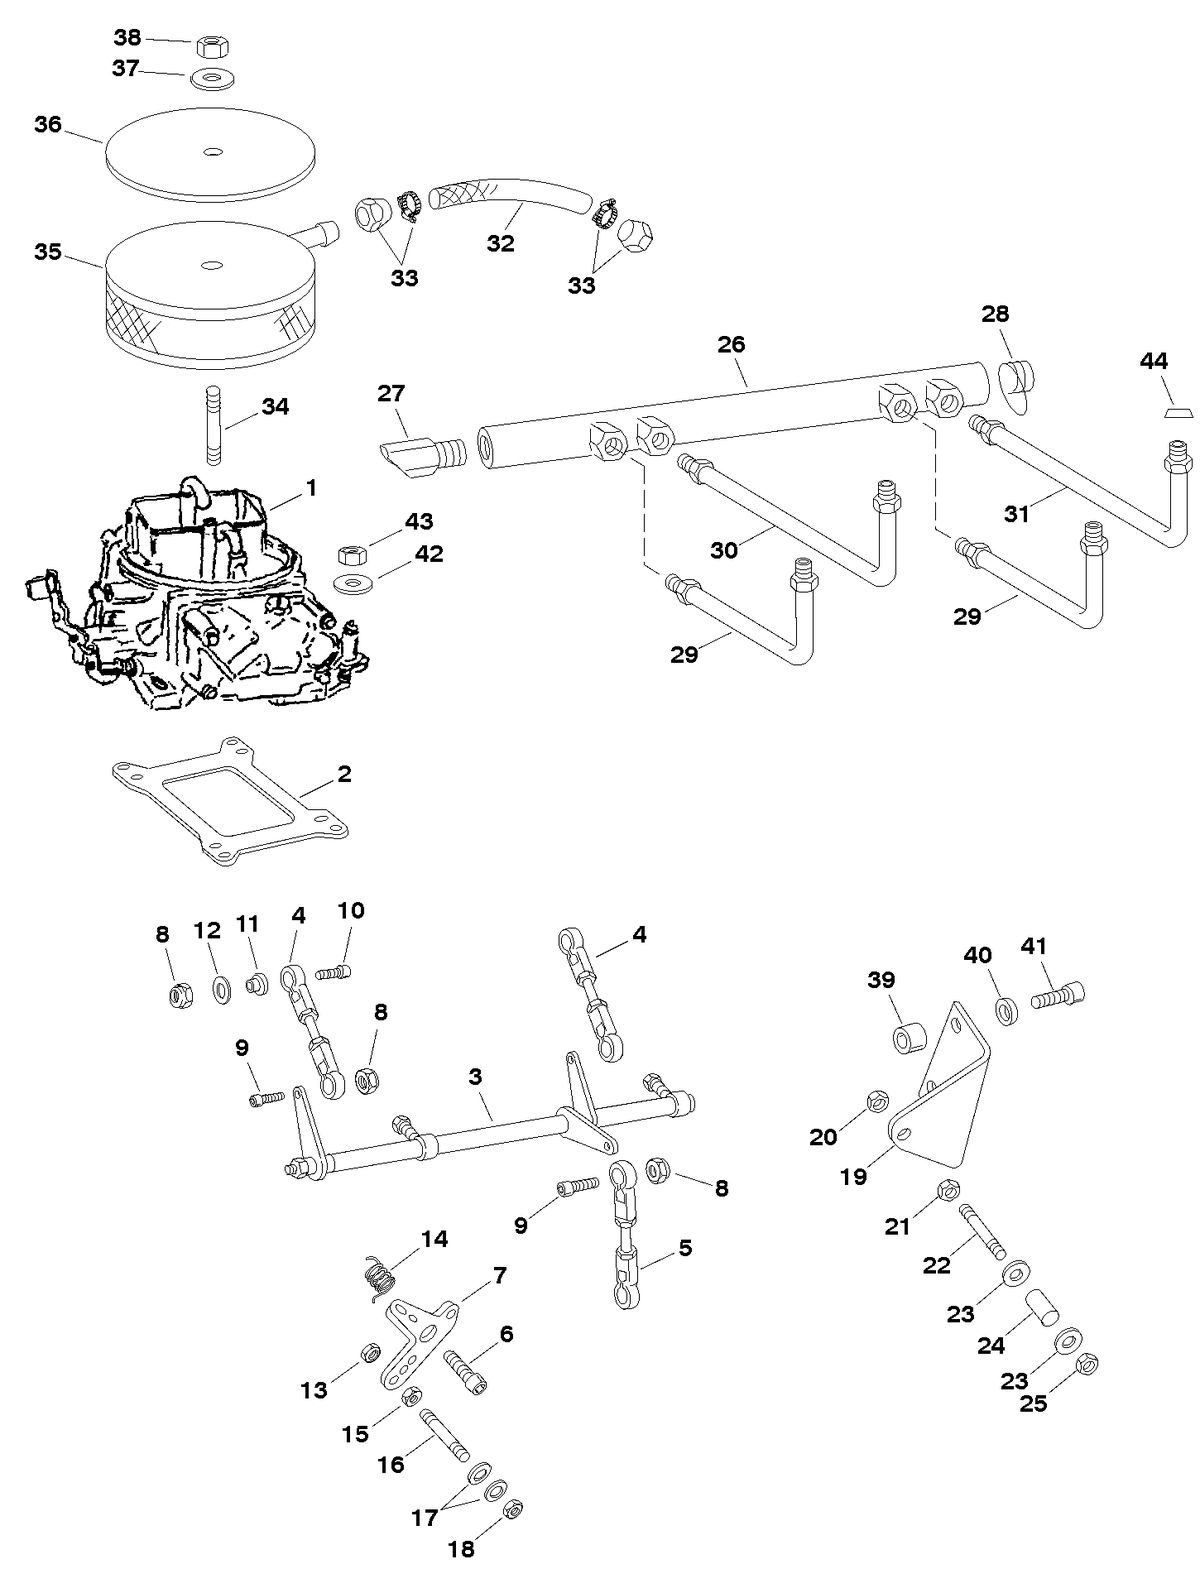 MERCRUISER 800 SC ENGINE CARBURETOR AND LINKAGE (PAGE 1 0F 2)